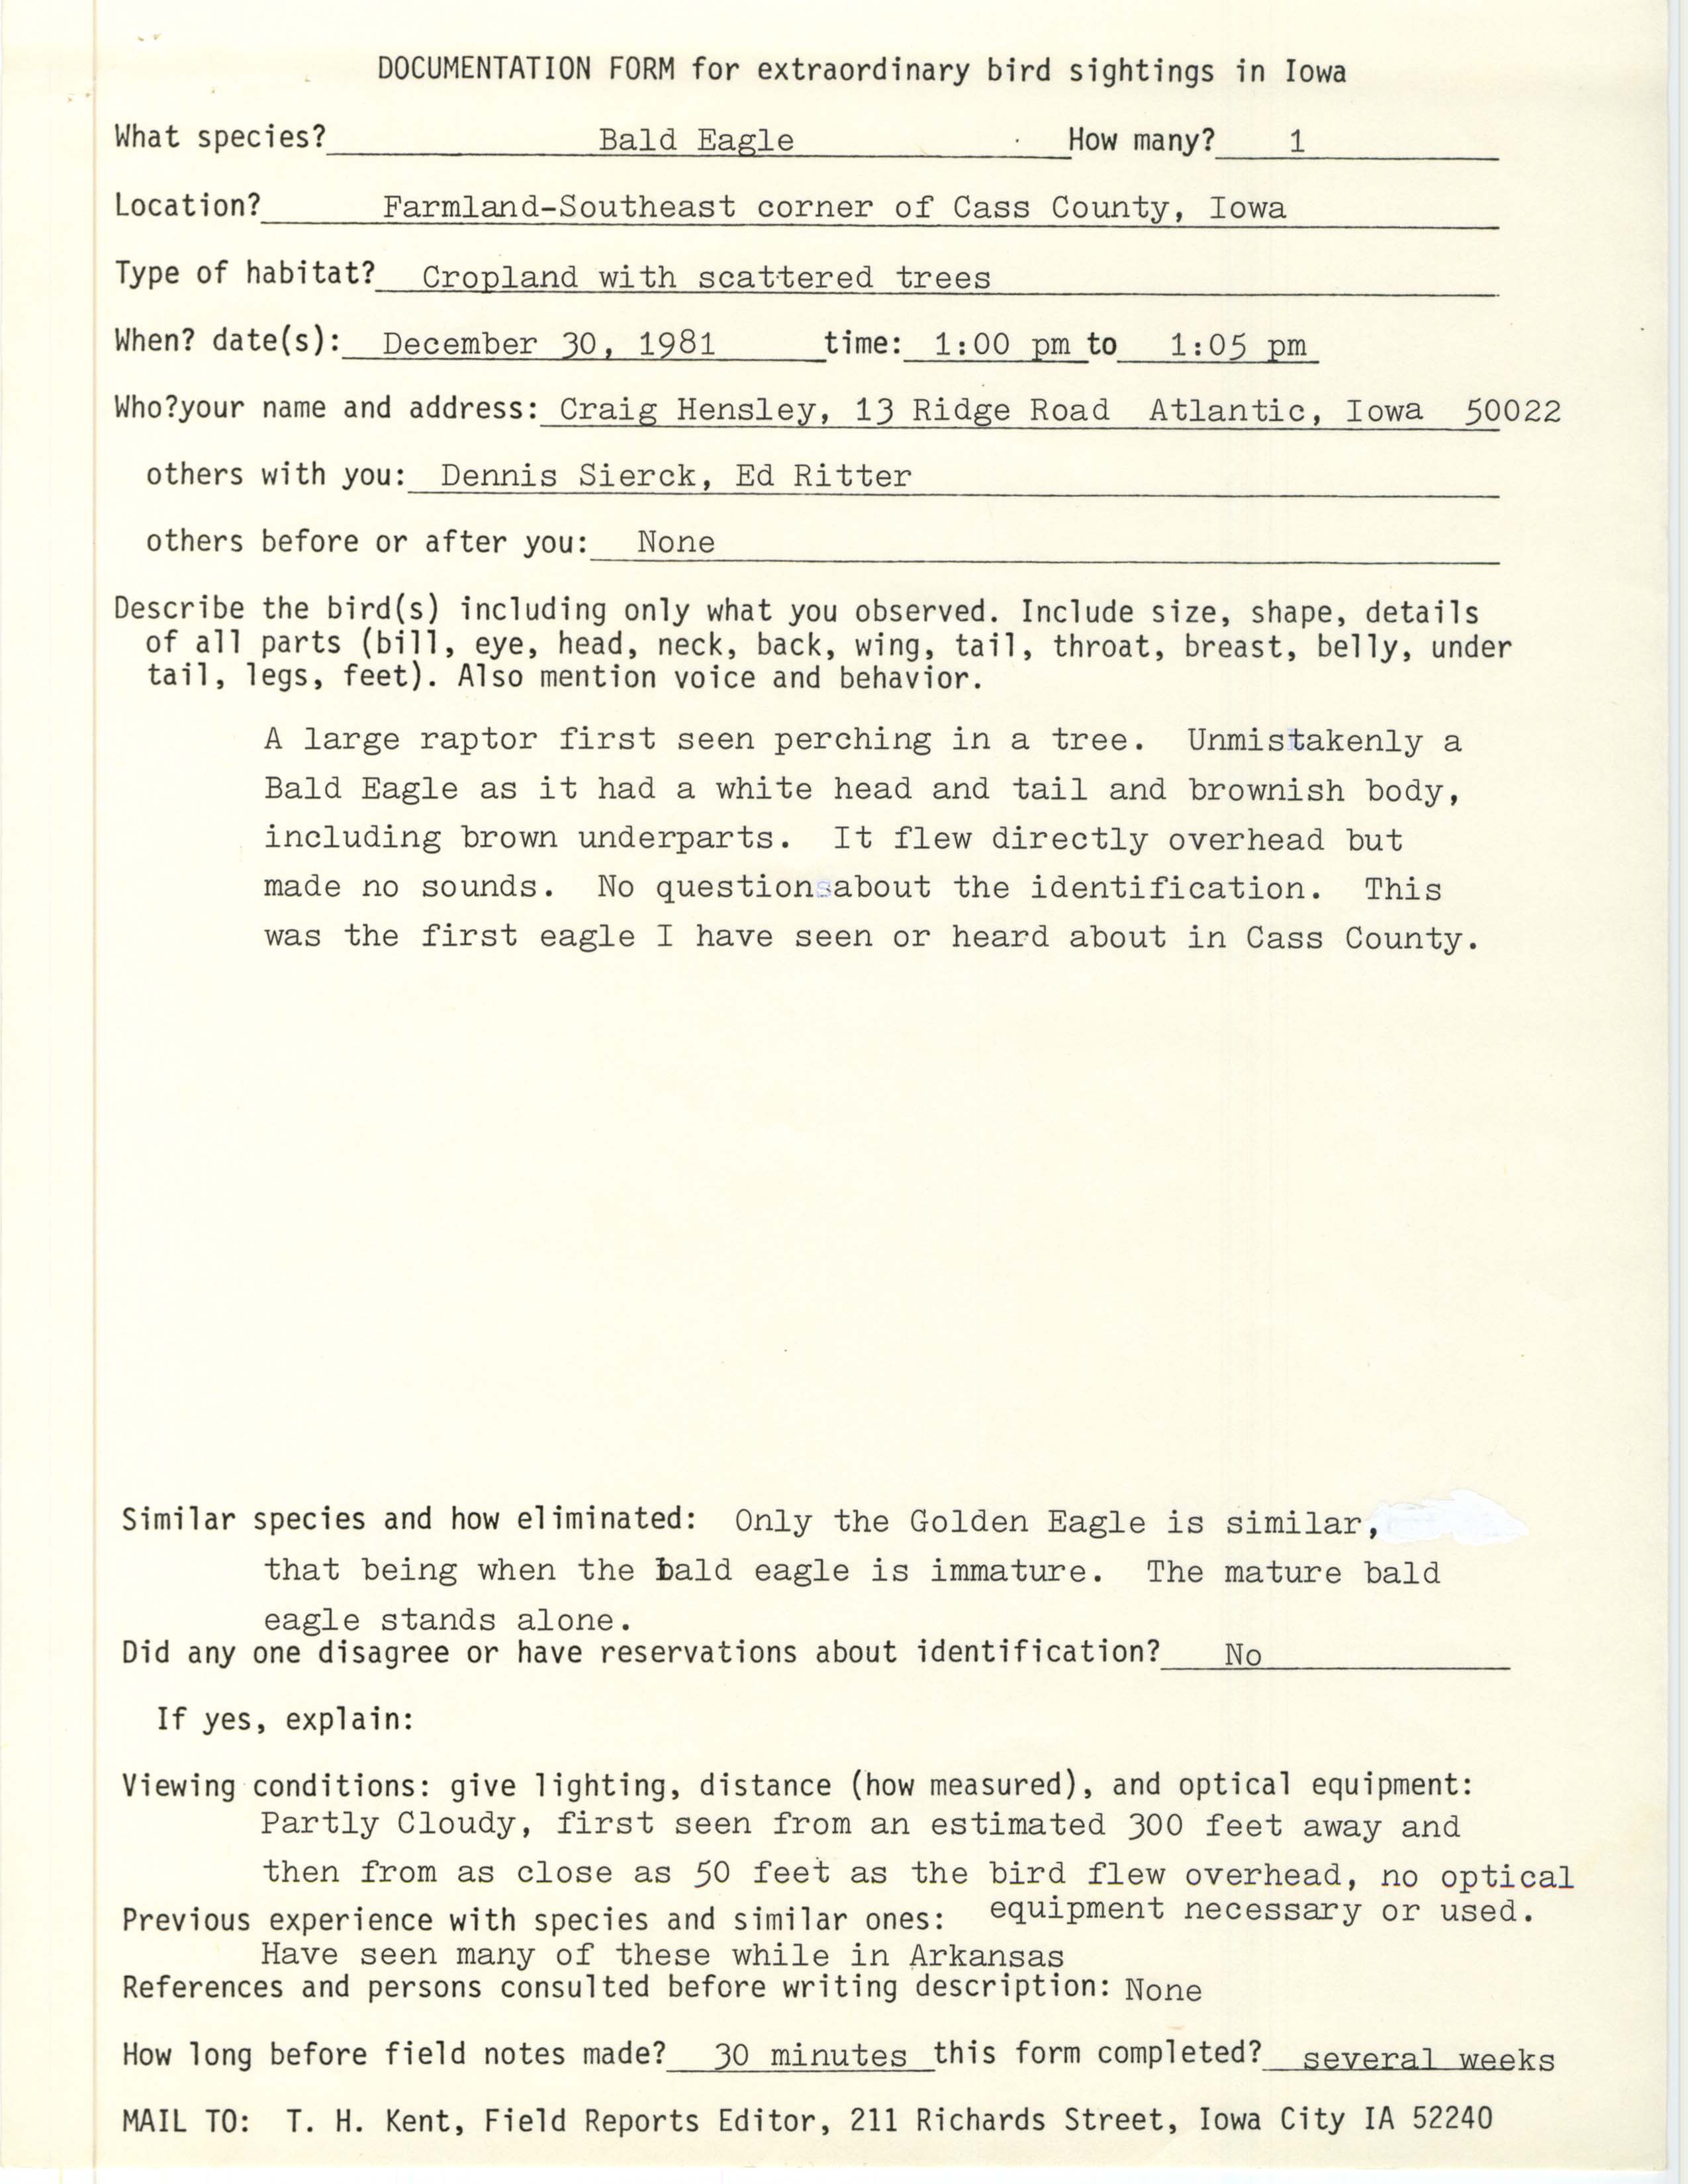 Rare bird documentation form for Bald Eagle at Cass County, 1981